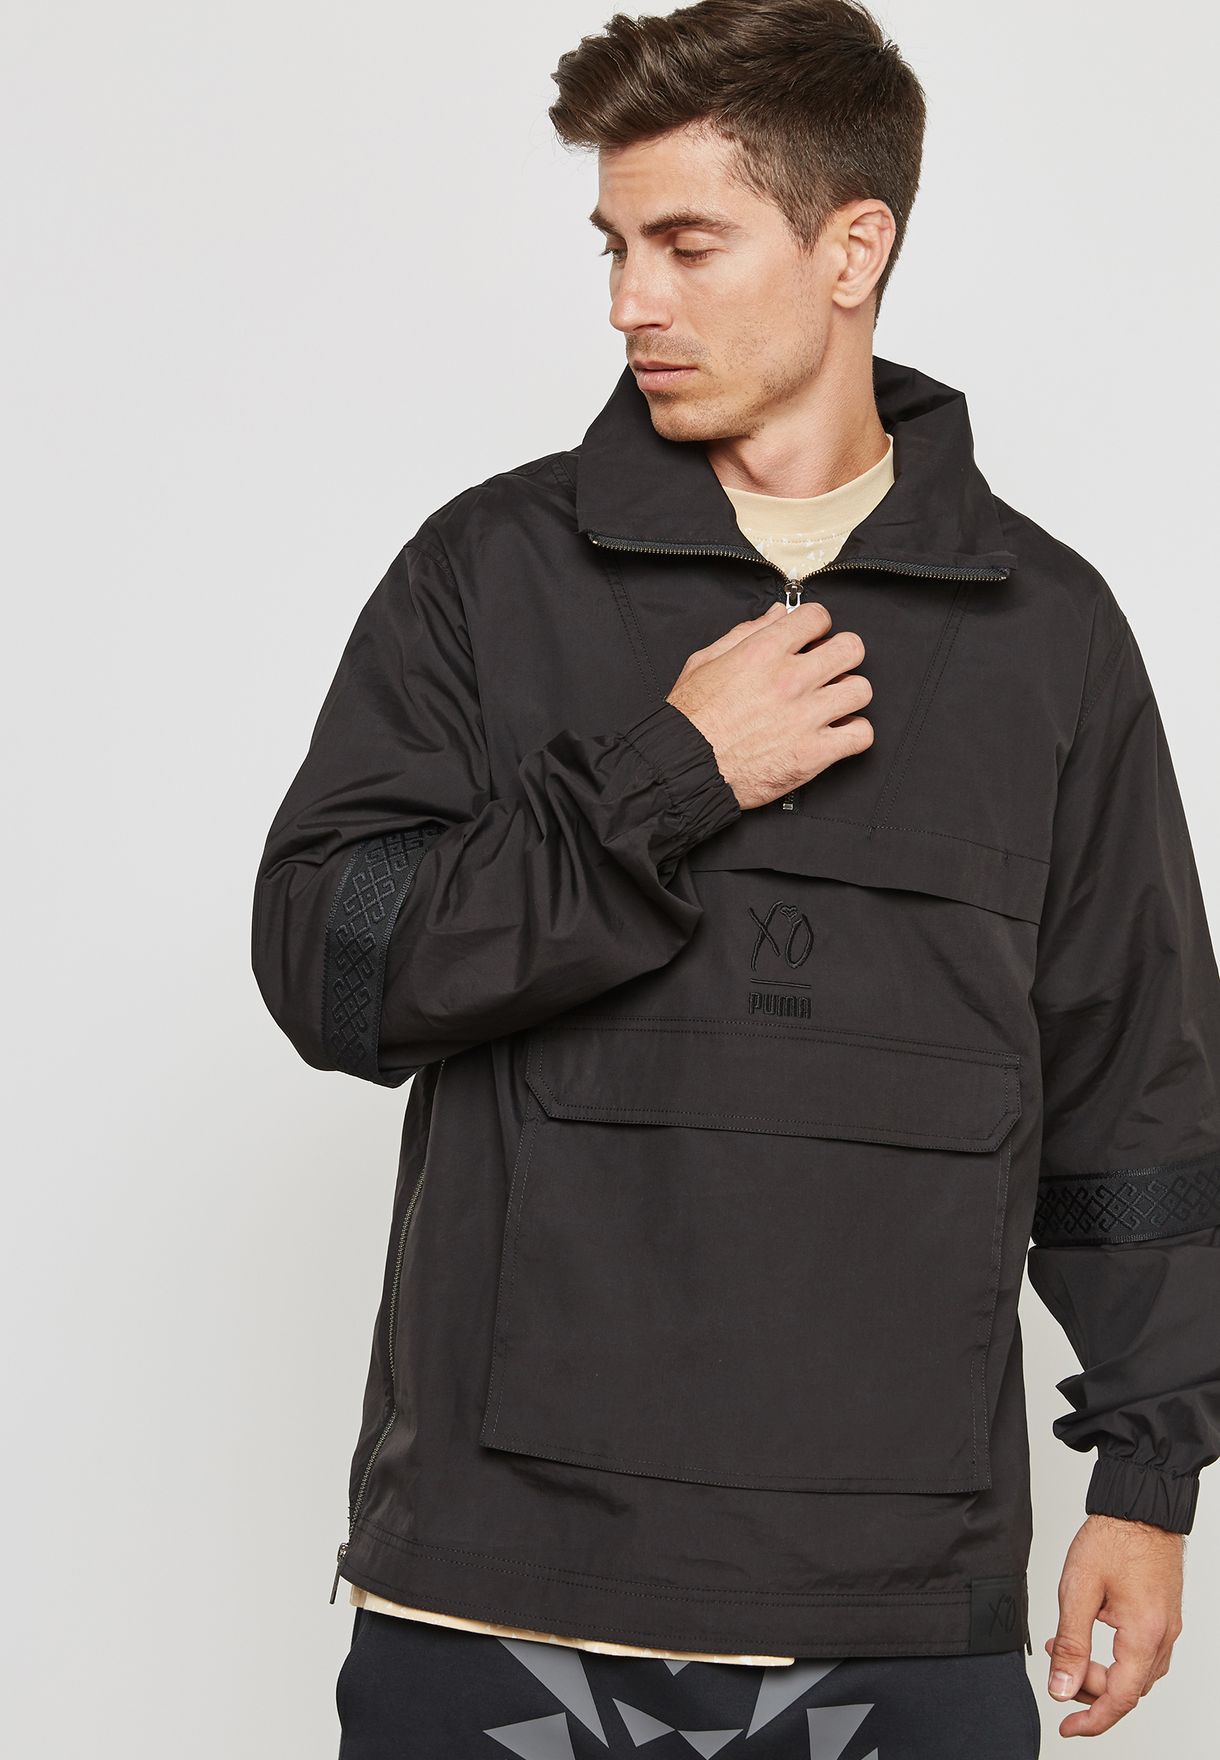 Buy PUMA black XO Half Zip Jacket for 